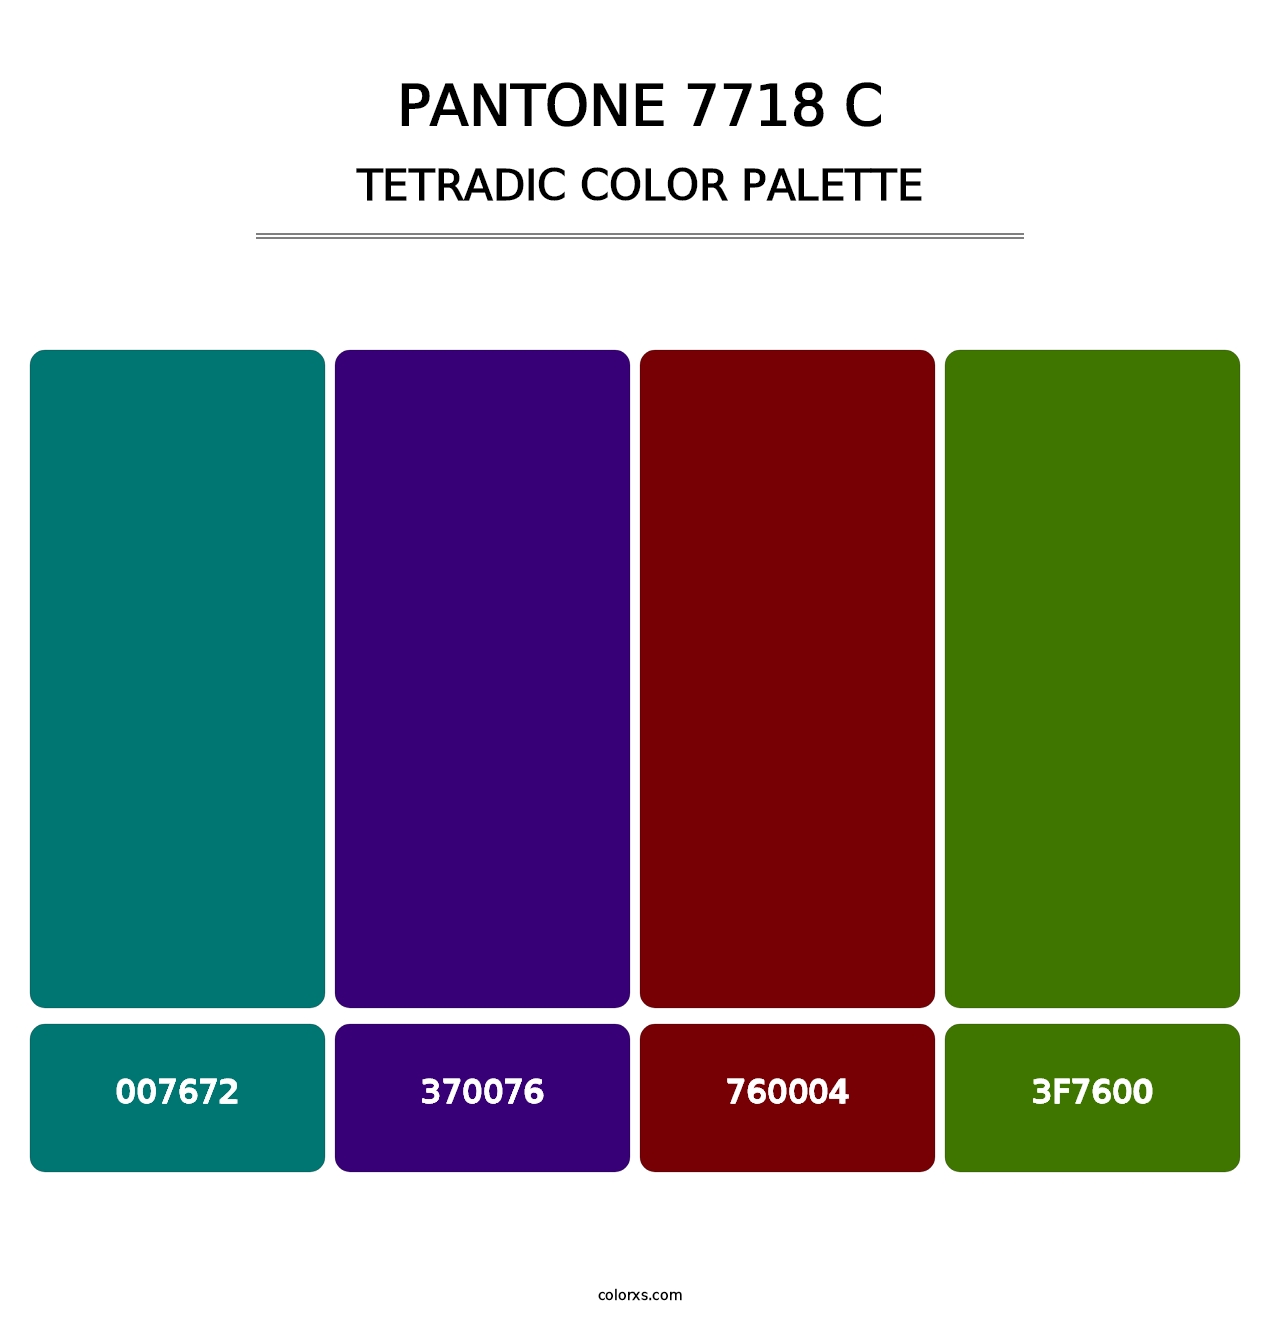 PANTONE 7718 C - Tetradic Color Palette